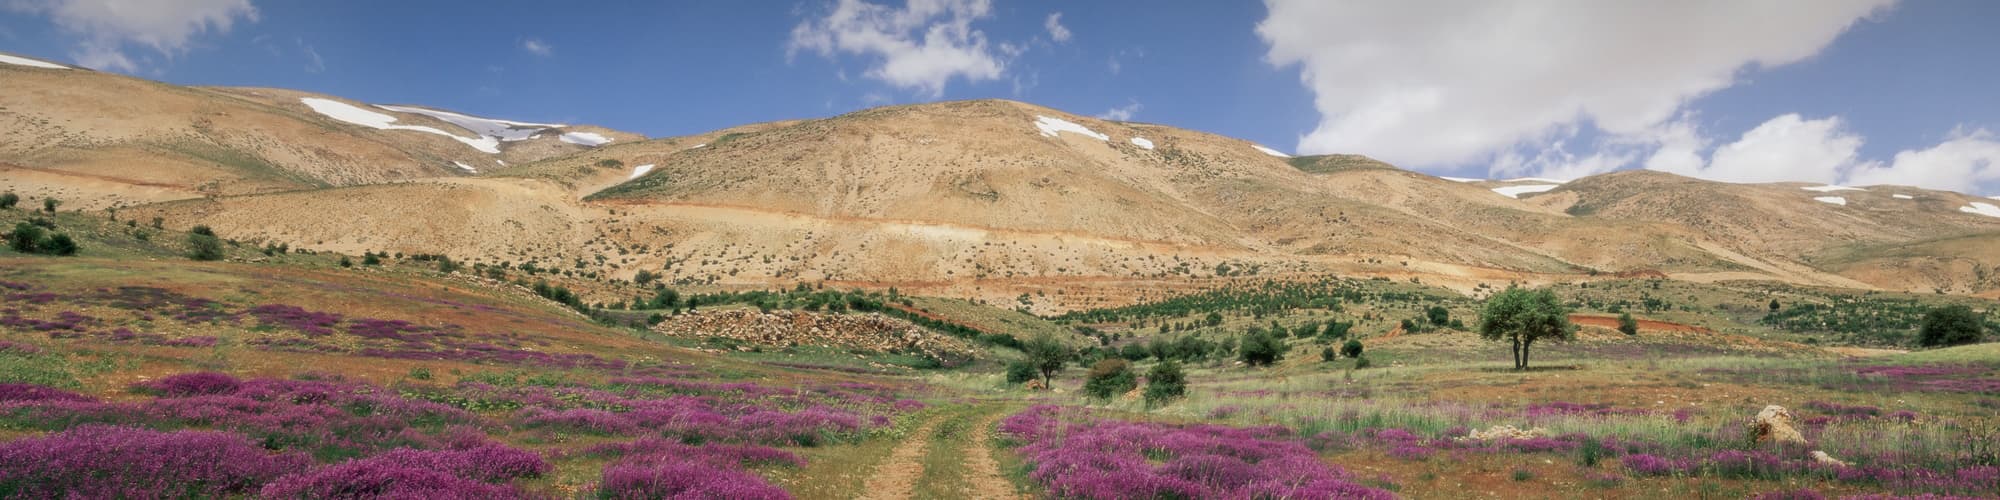 Trek au Liban : circuit, randonnée et voyage © Tony85/stock.adobe.com